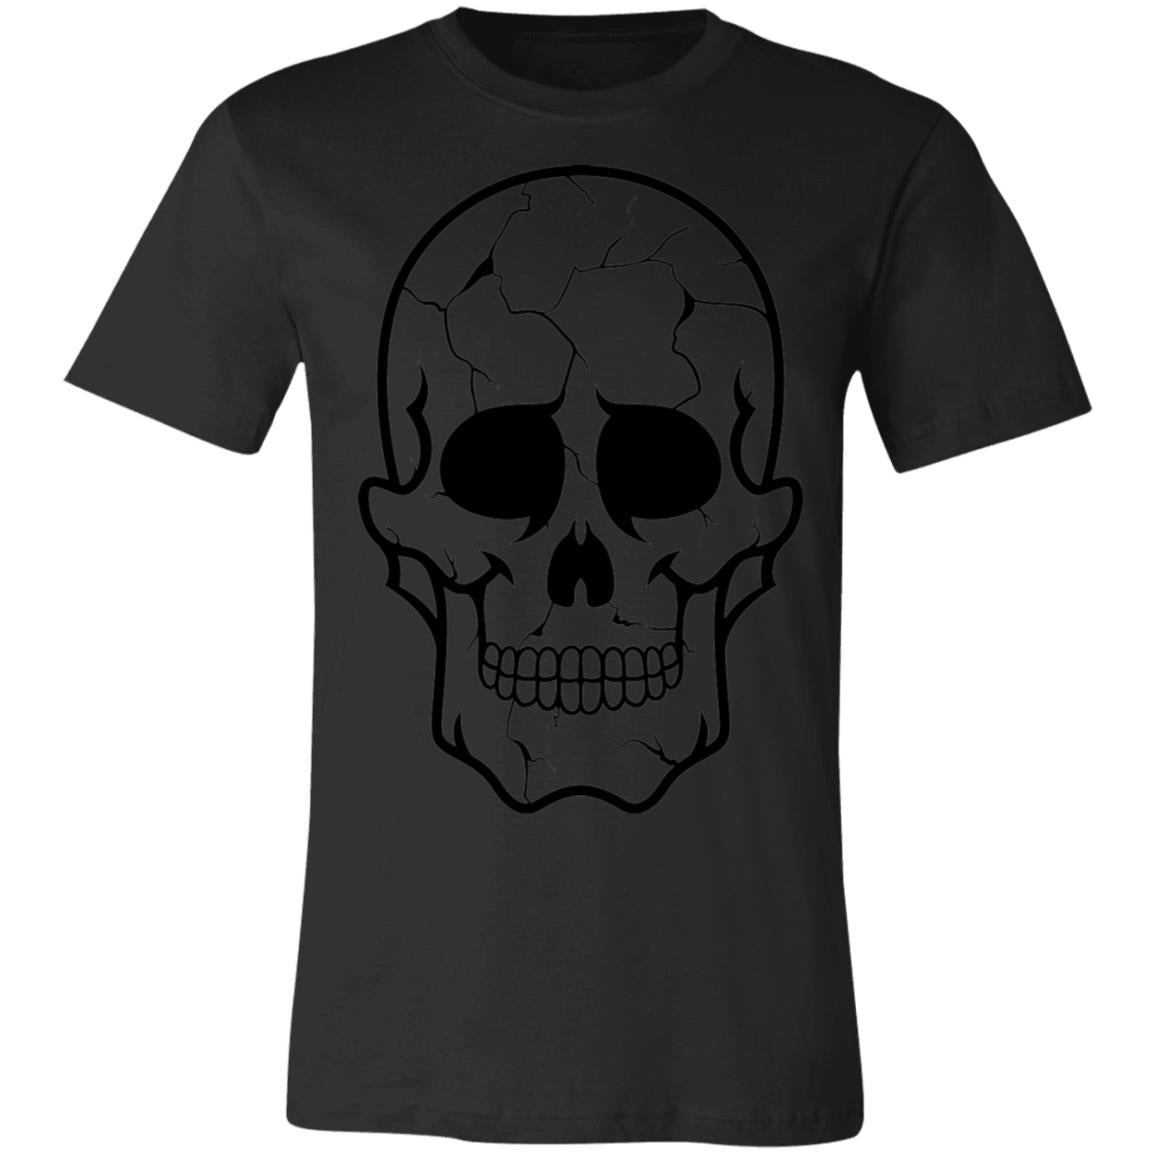 Skull 130 Santa Muerte Shirt-Express Your Love Gifts